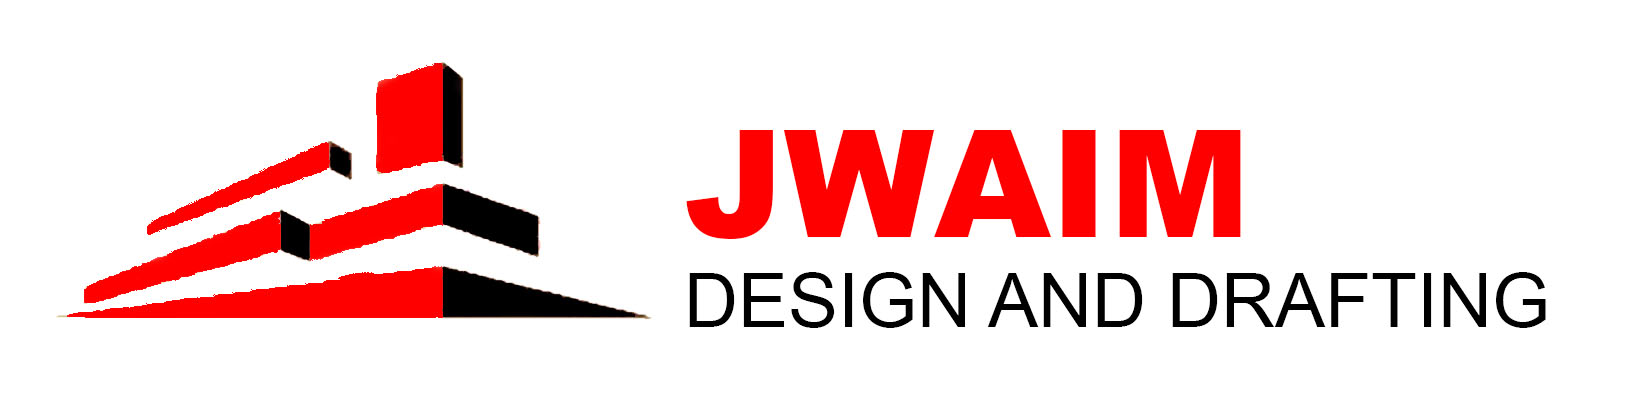 JWAIM Design and Drafting, LLC Logo